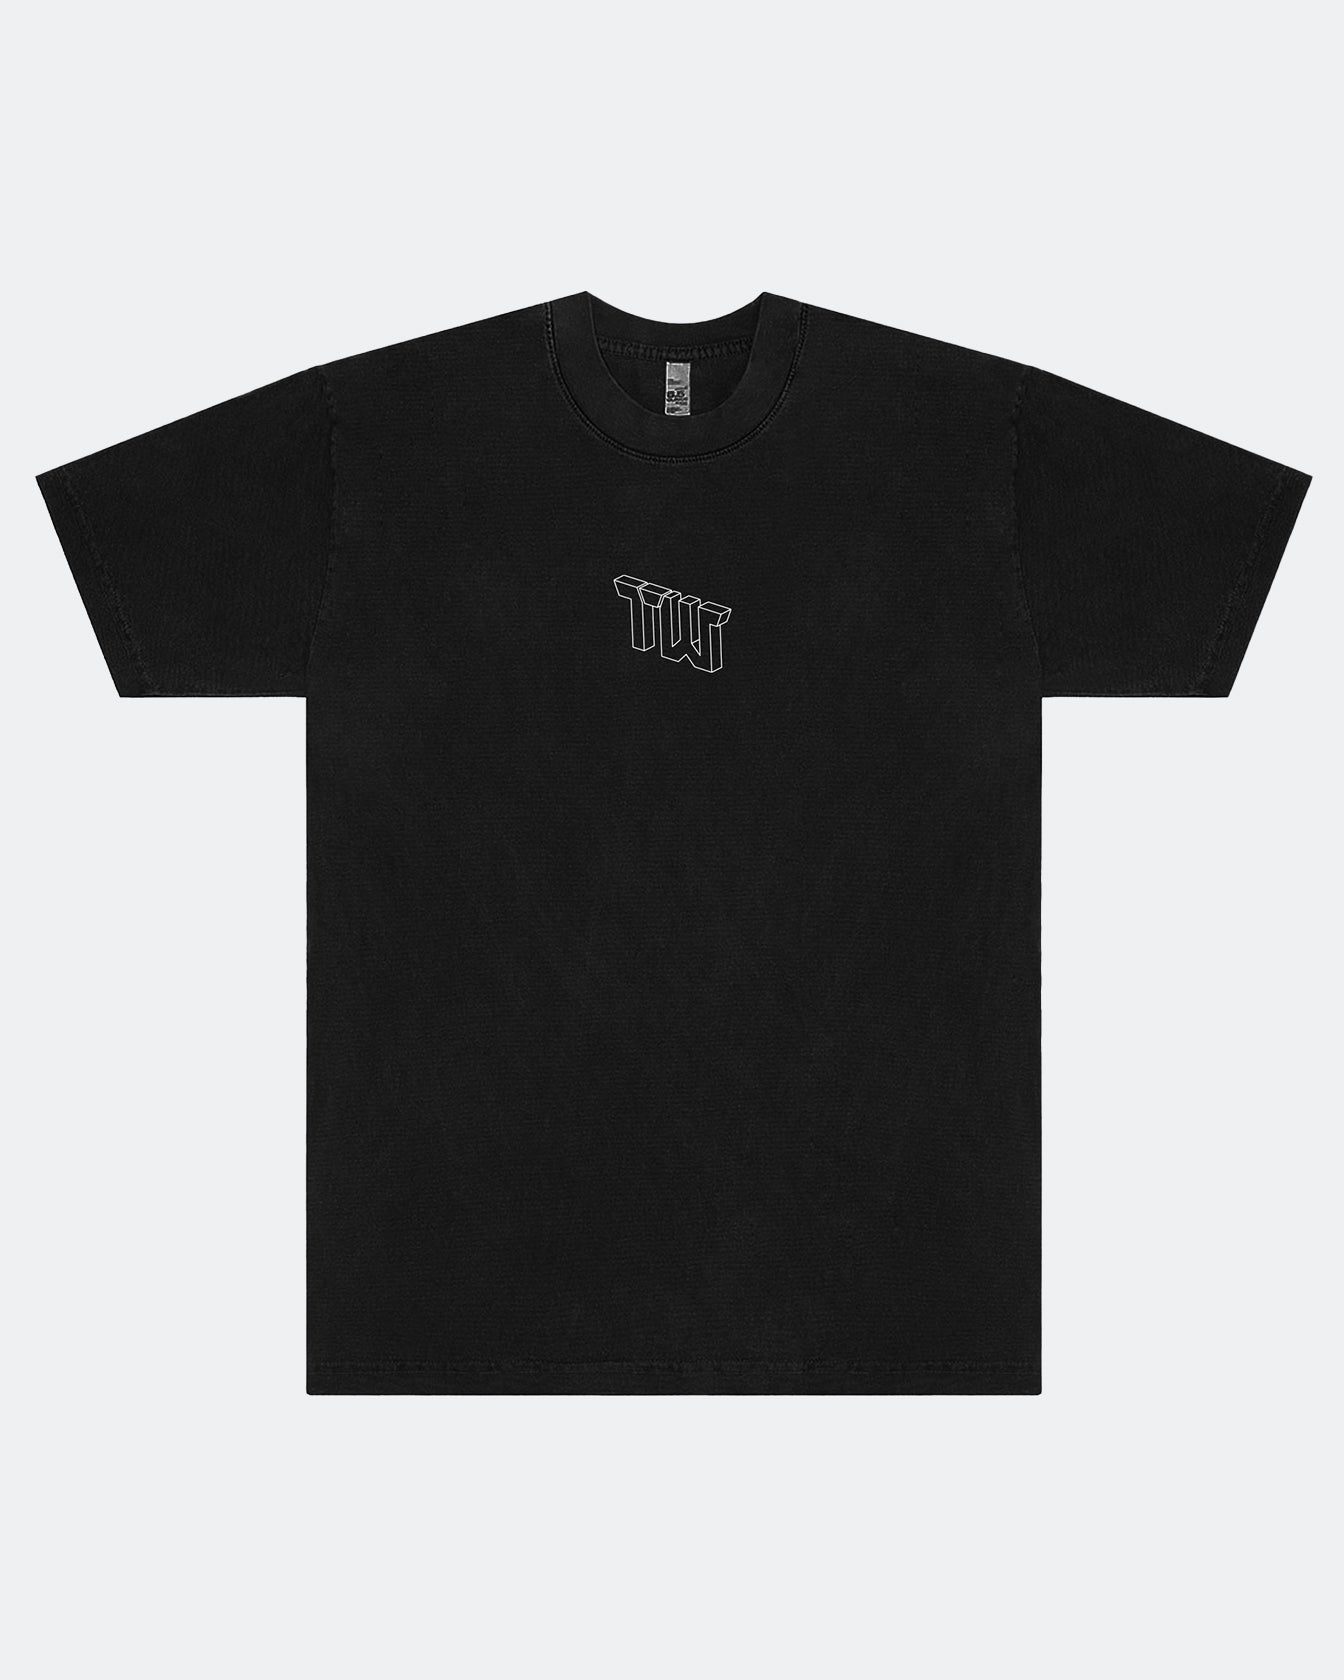 Deconstructed Black T Shirt